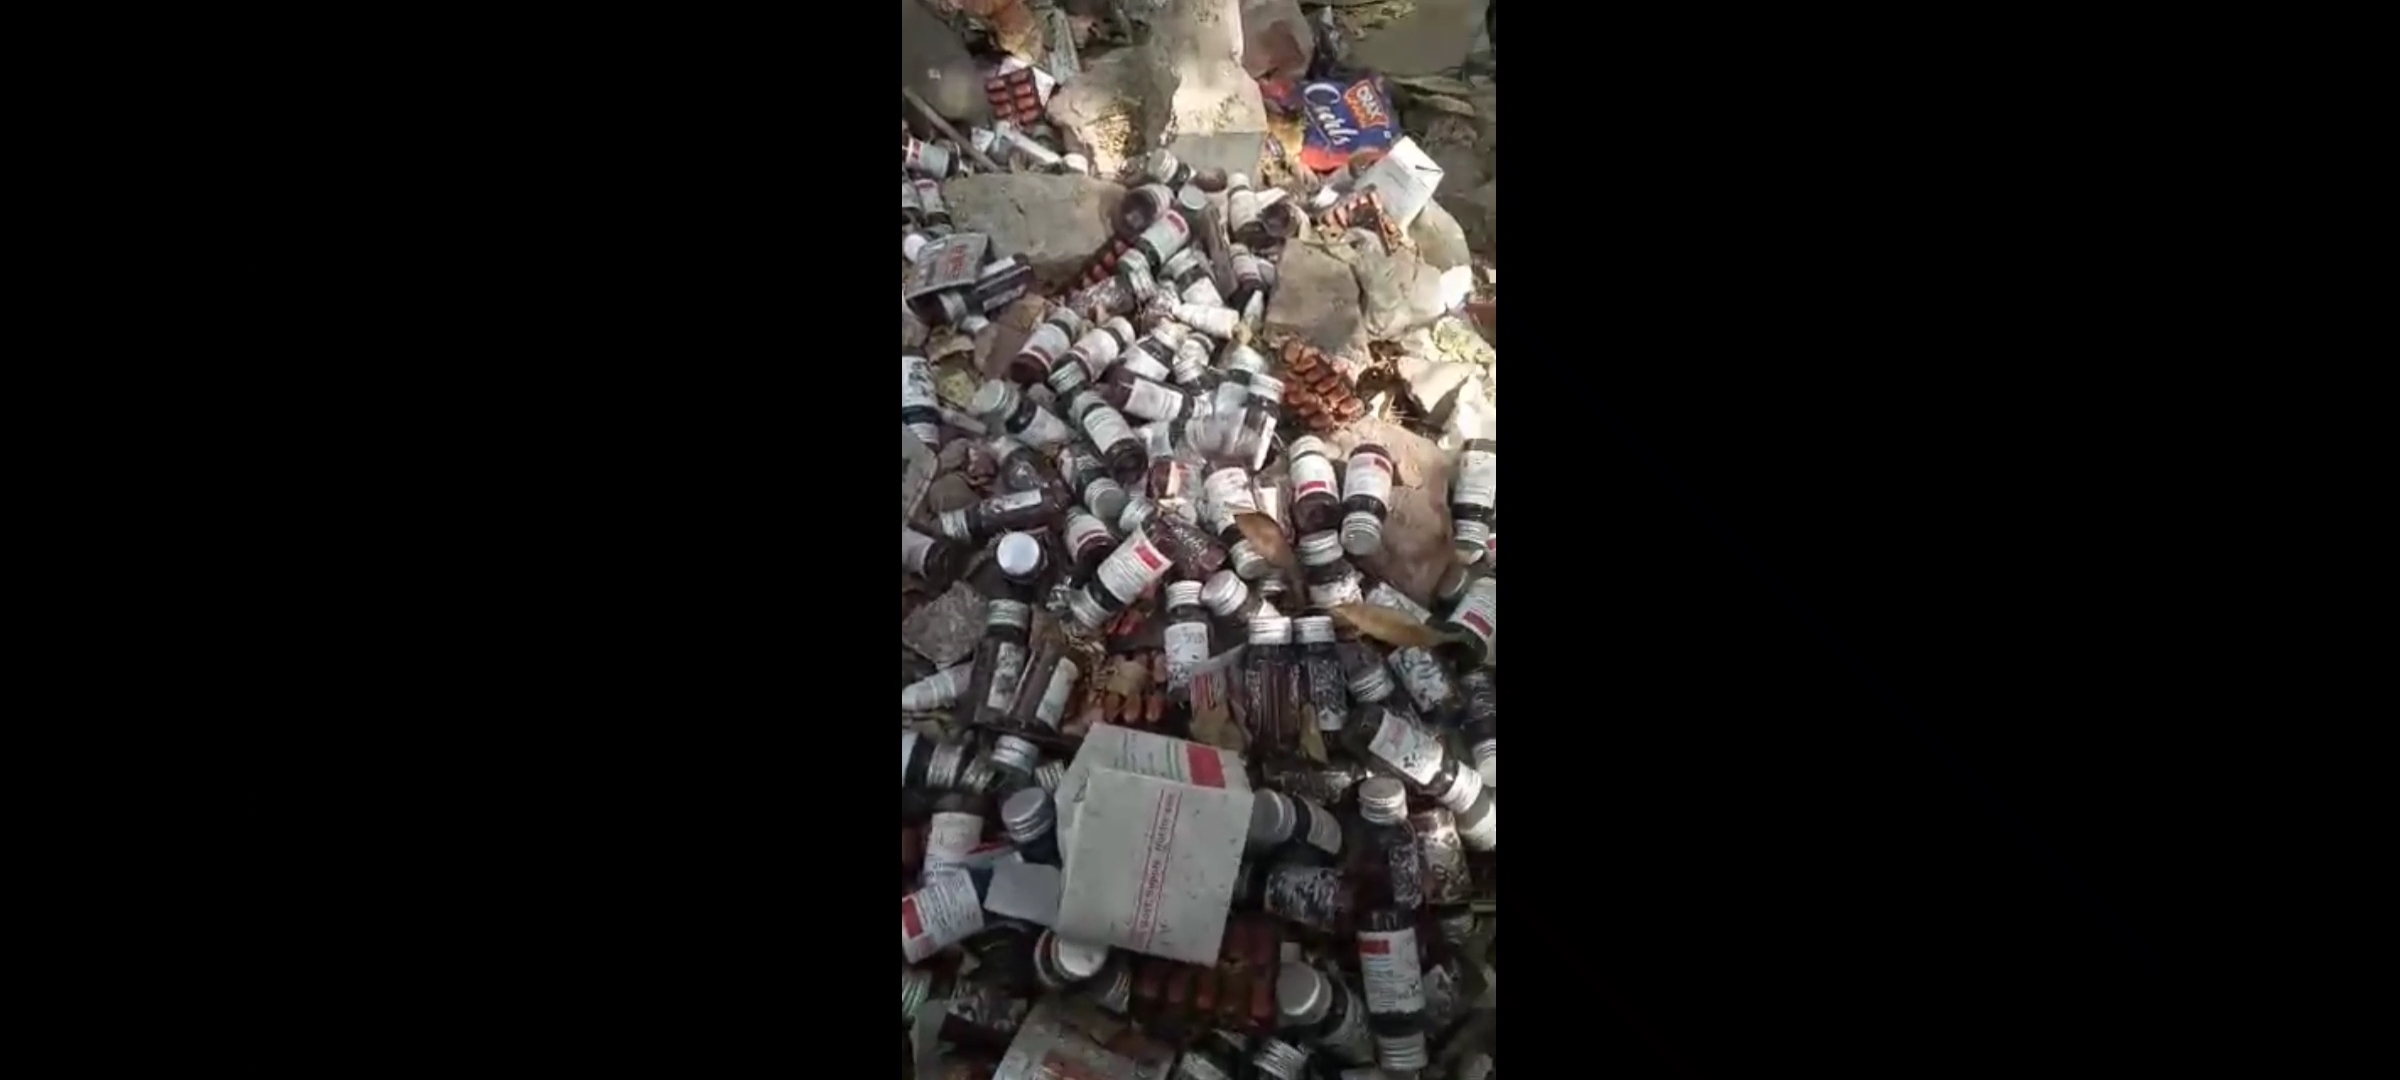 Medicines worth lakhs dumped in Lado Sarai forest